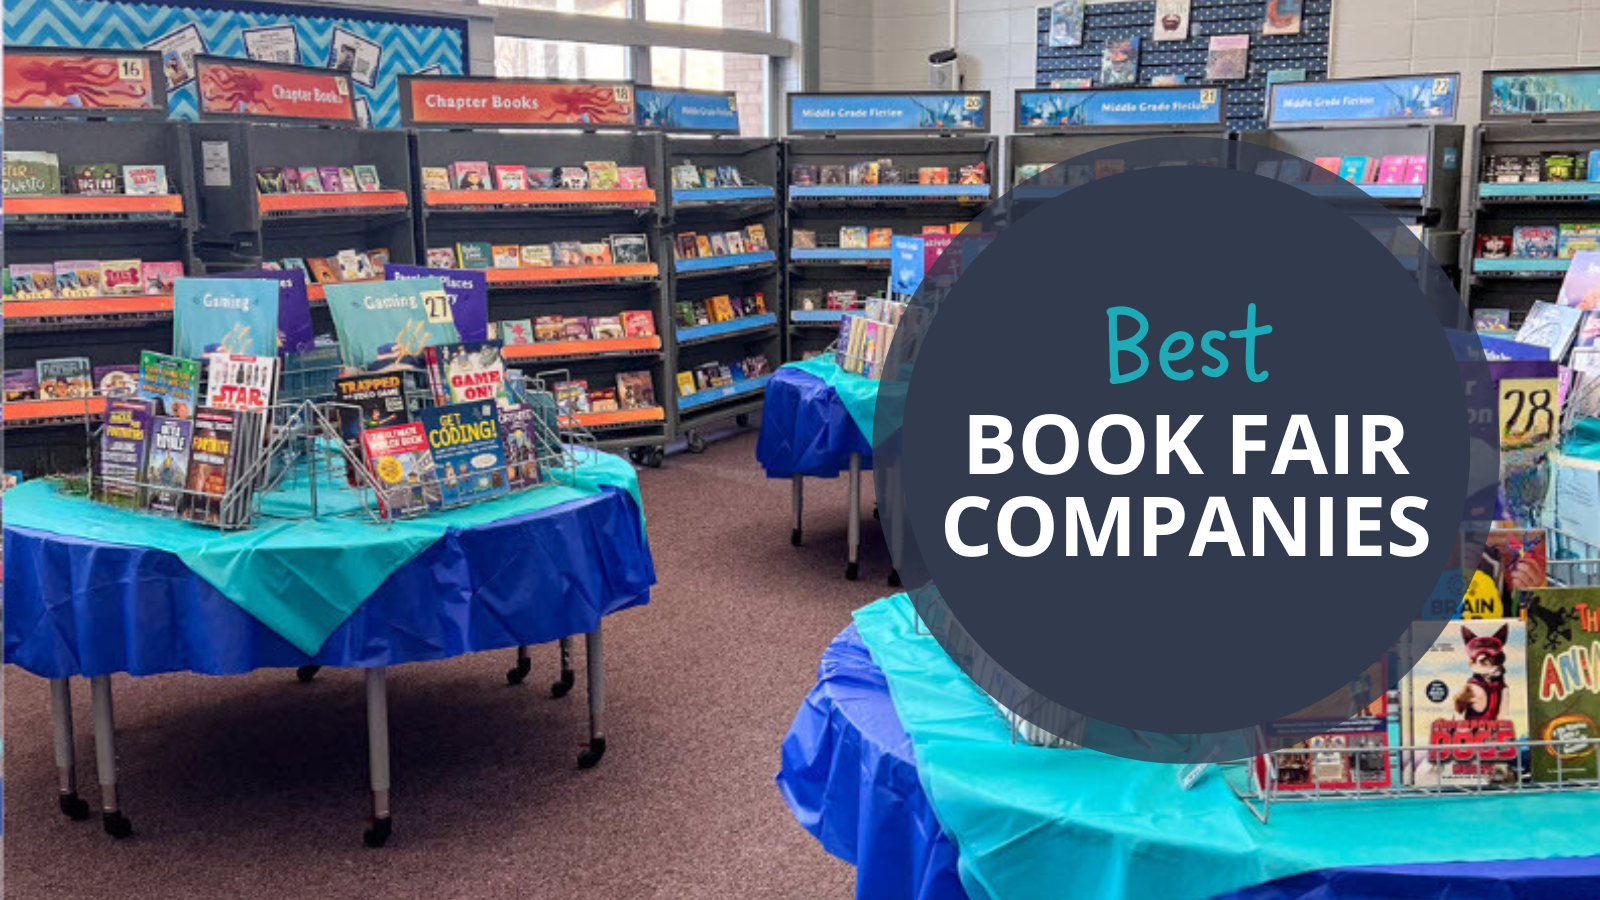 School book fair set up on shelves and tables. Text reads Best Book Fair Companies